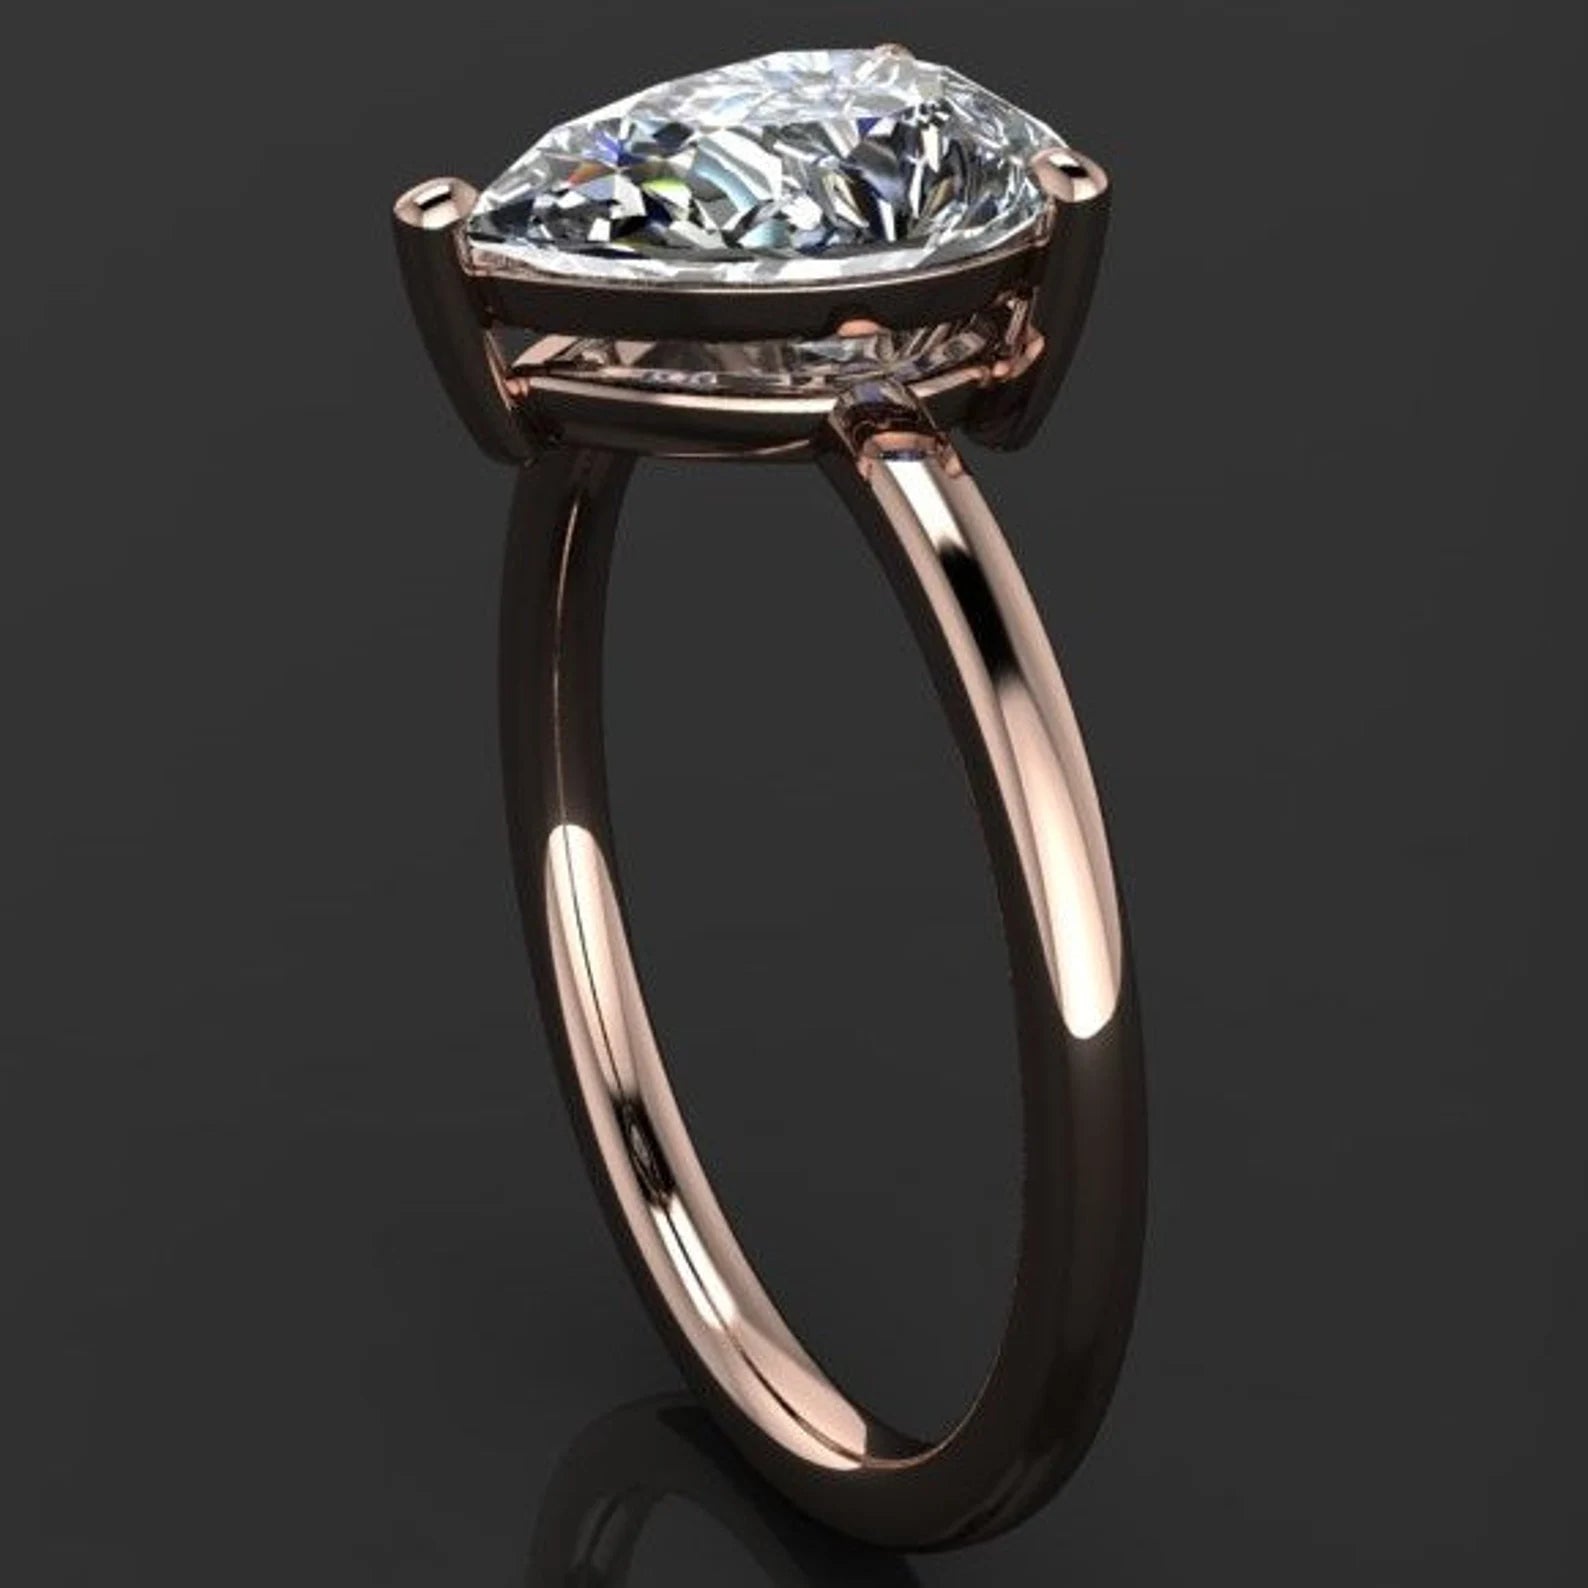 naked eliza ring - 2 carat pear cut NEO moissanite engagement ring - J Hollywood Designs